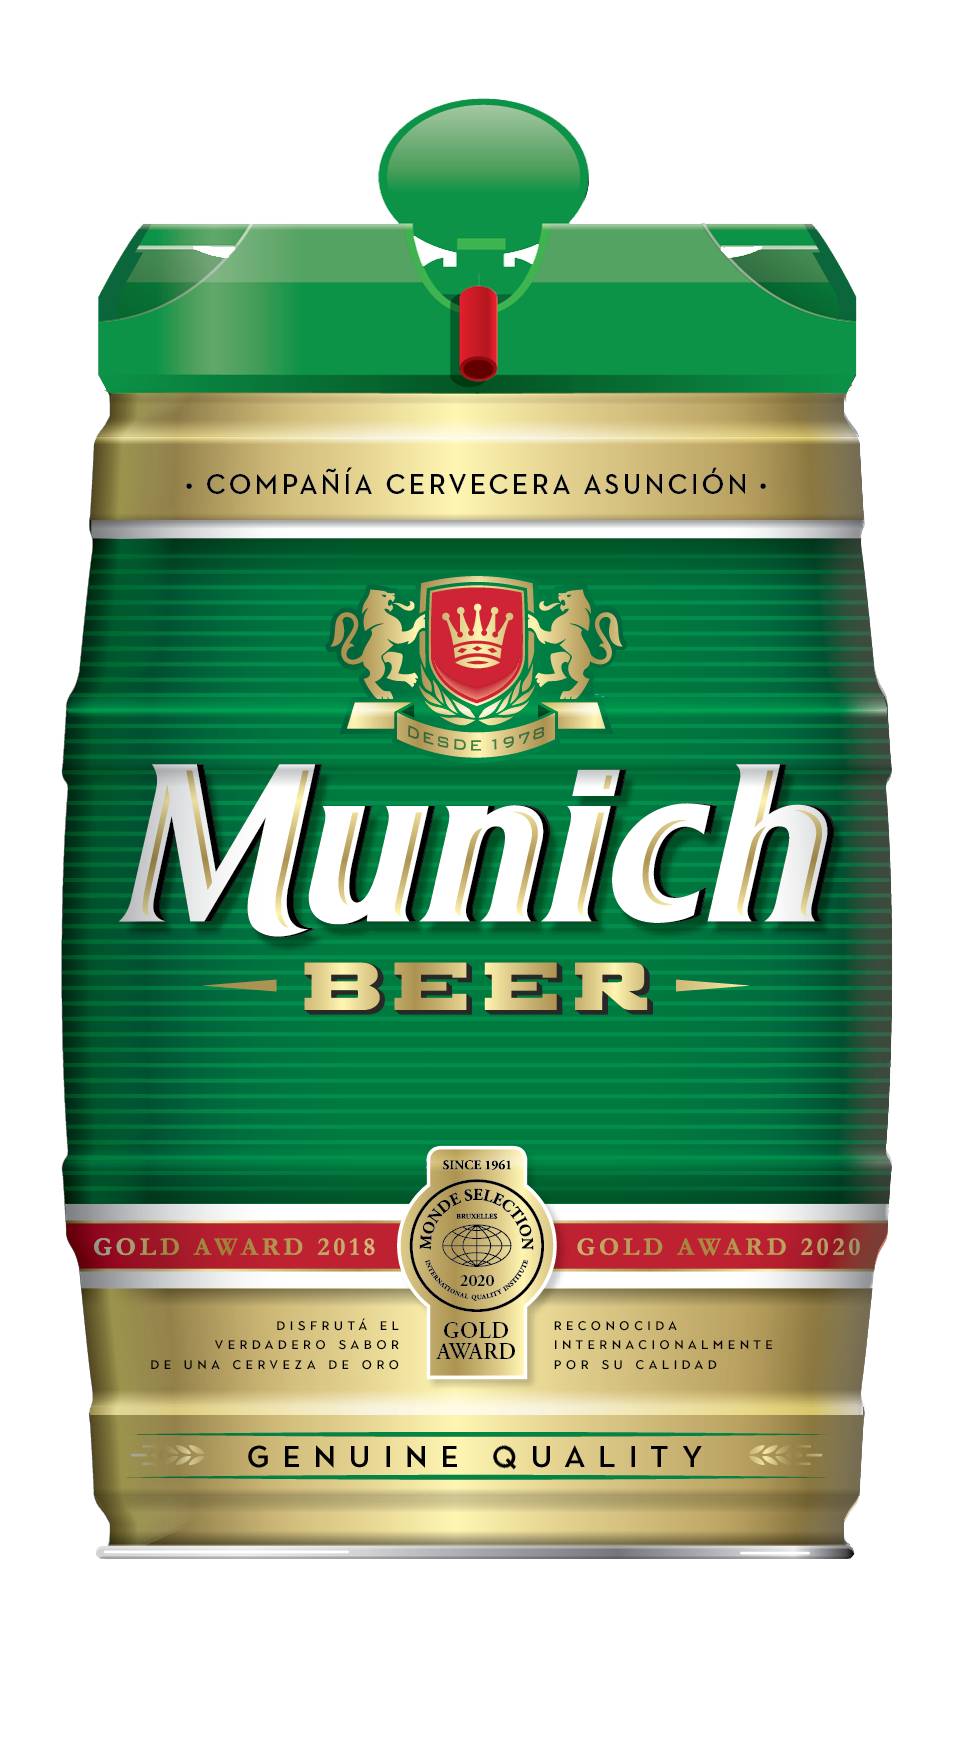 Cerveza Munich lanza su barril de 5 litros de Chopp